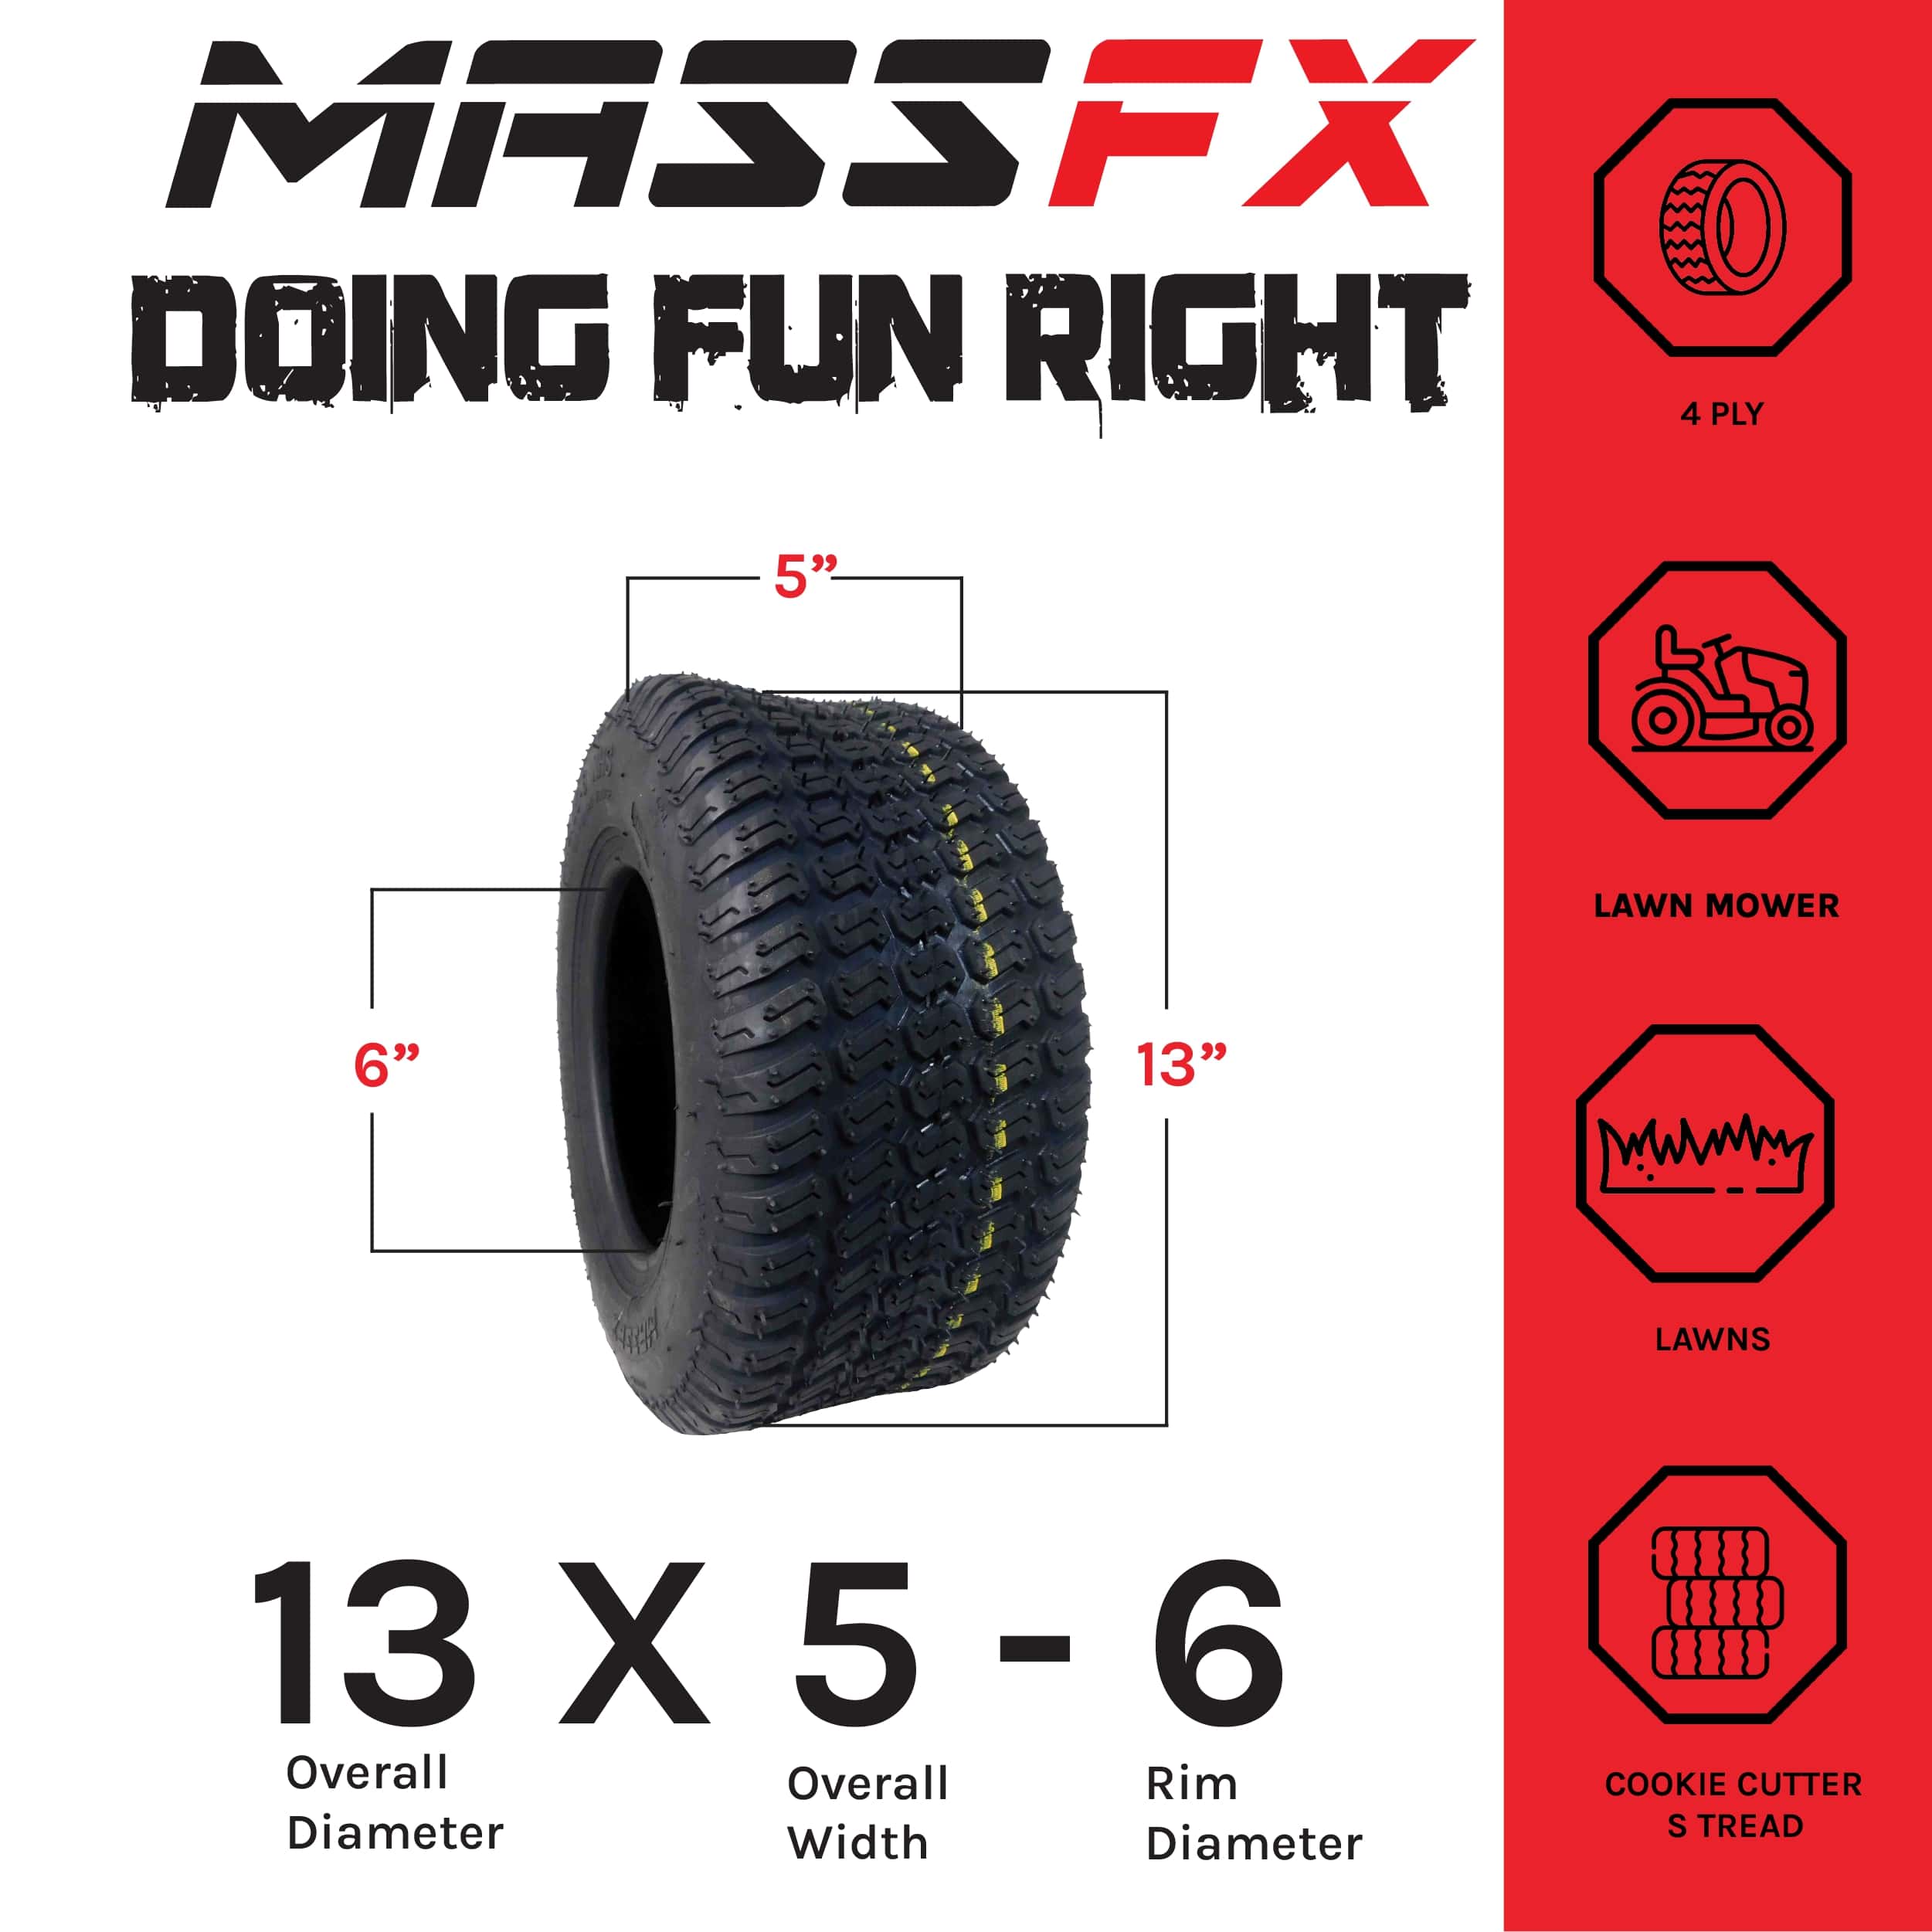 MASSFX 13x5-6 Go-Kart Tires 4ply 2-Pack